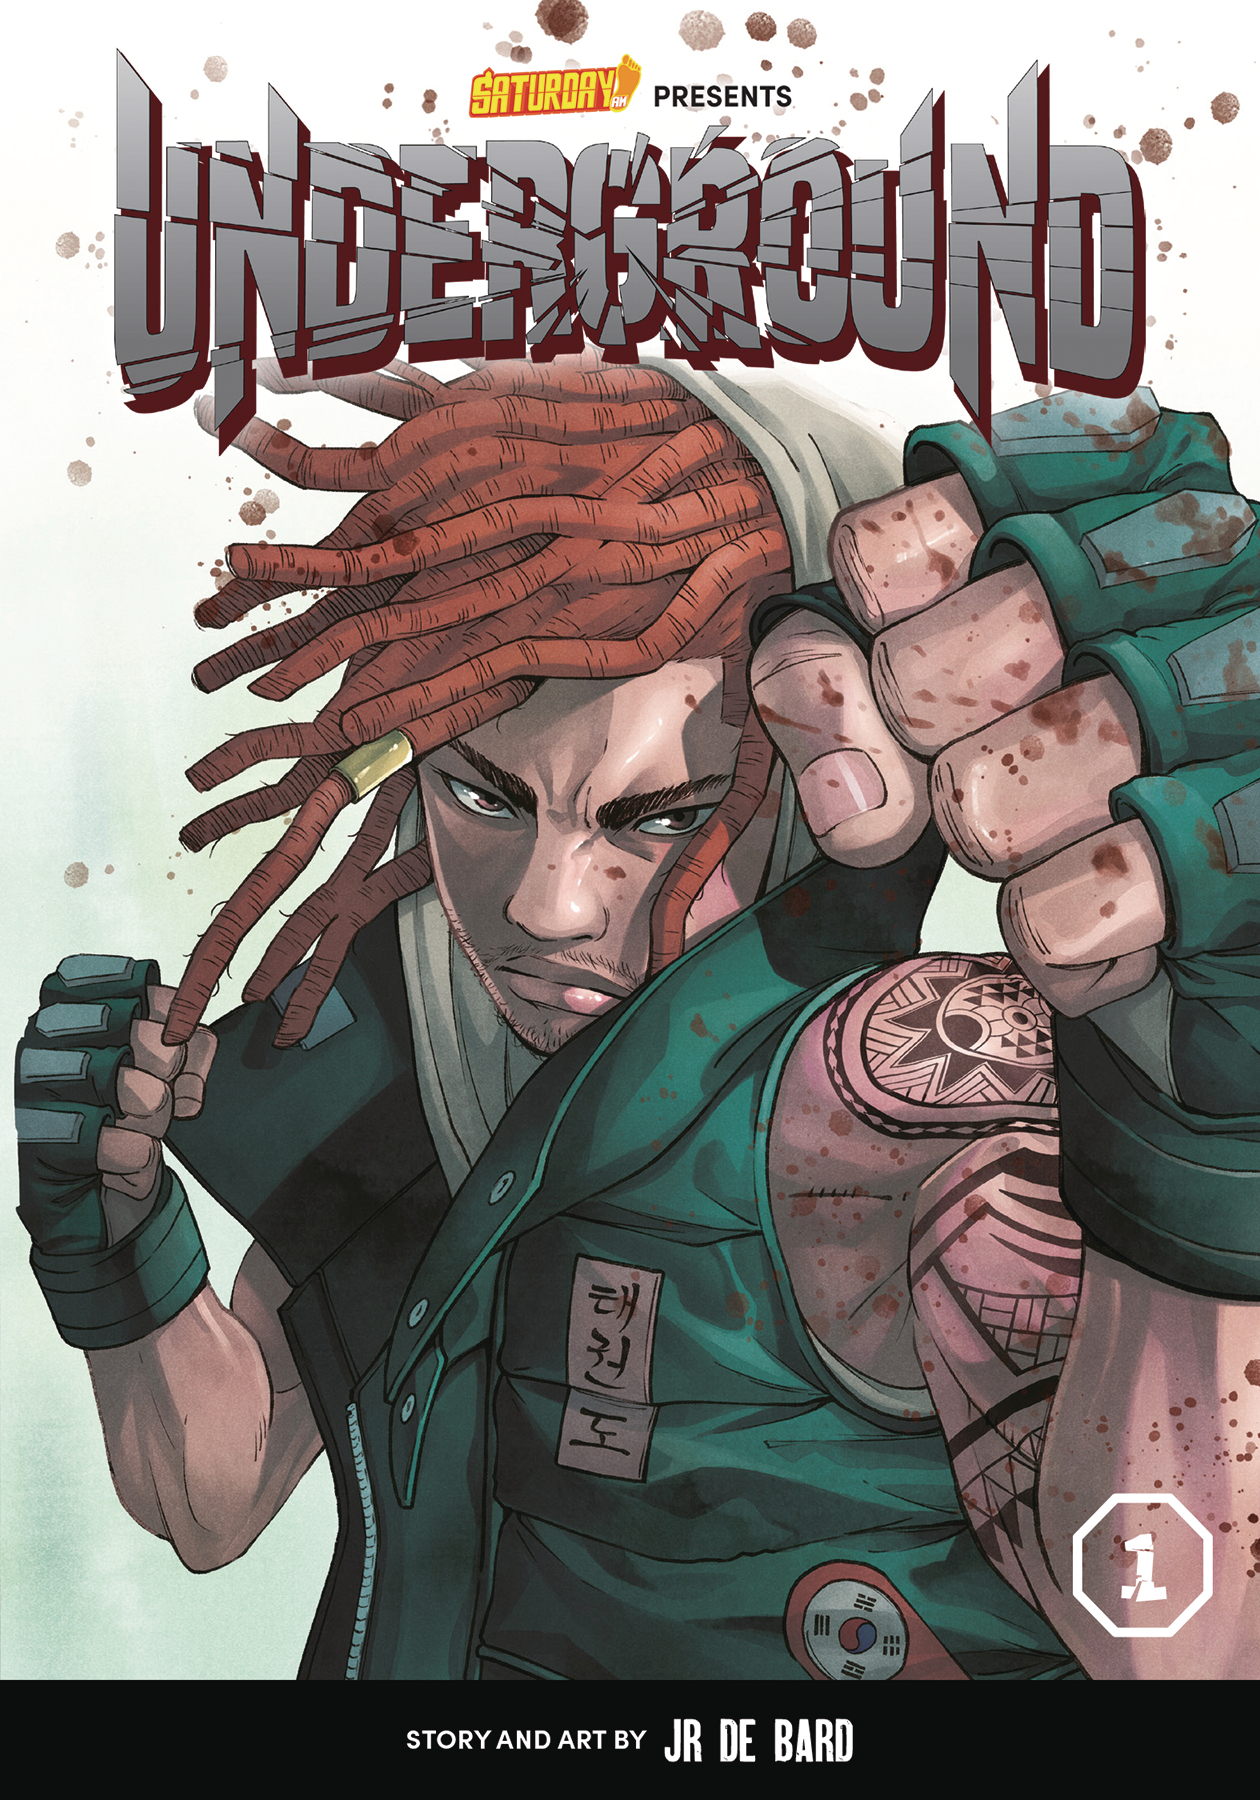 Underground Graphic Novel Volume 1 Fight Club (Mature)